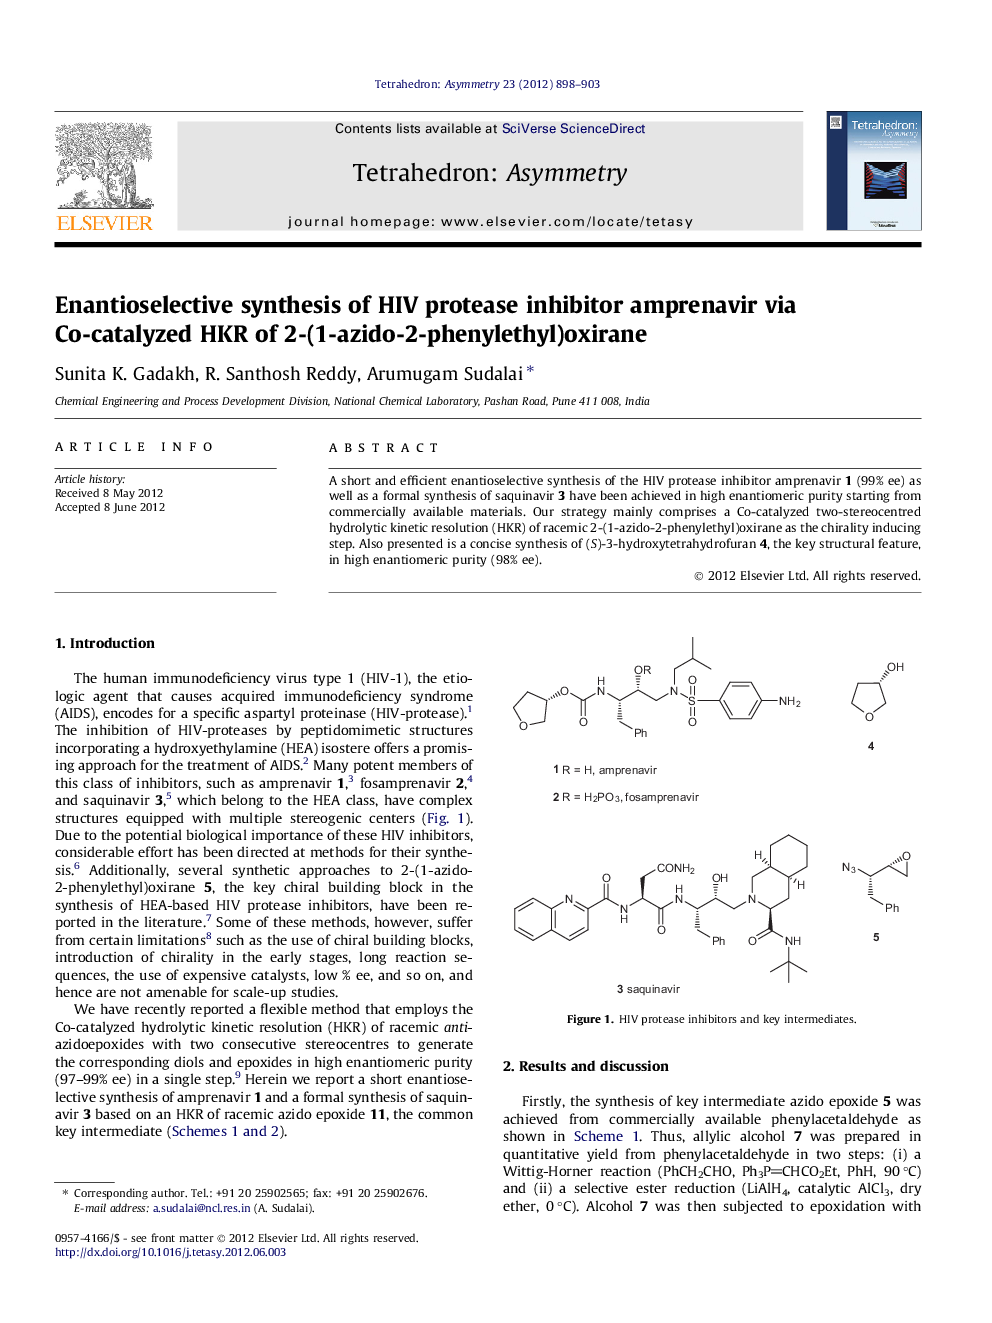 Enantioselective synthesis of HIV protease inhibitor amprenavir via Co-catalyzed HKR of 2-(1-azido-2-phenylethyl)oxirane